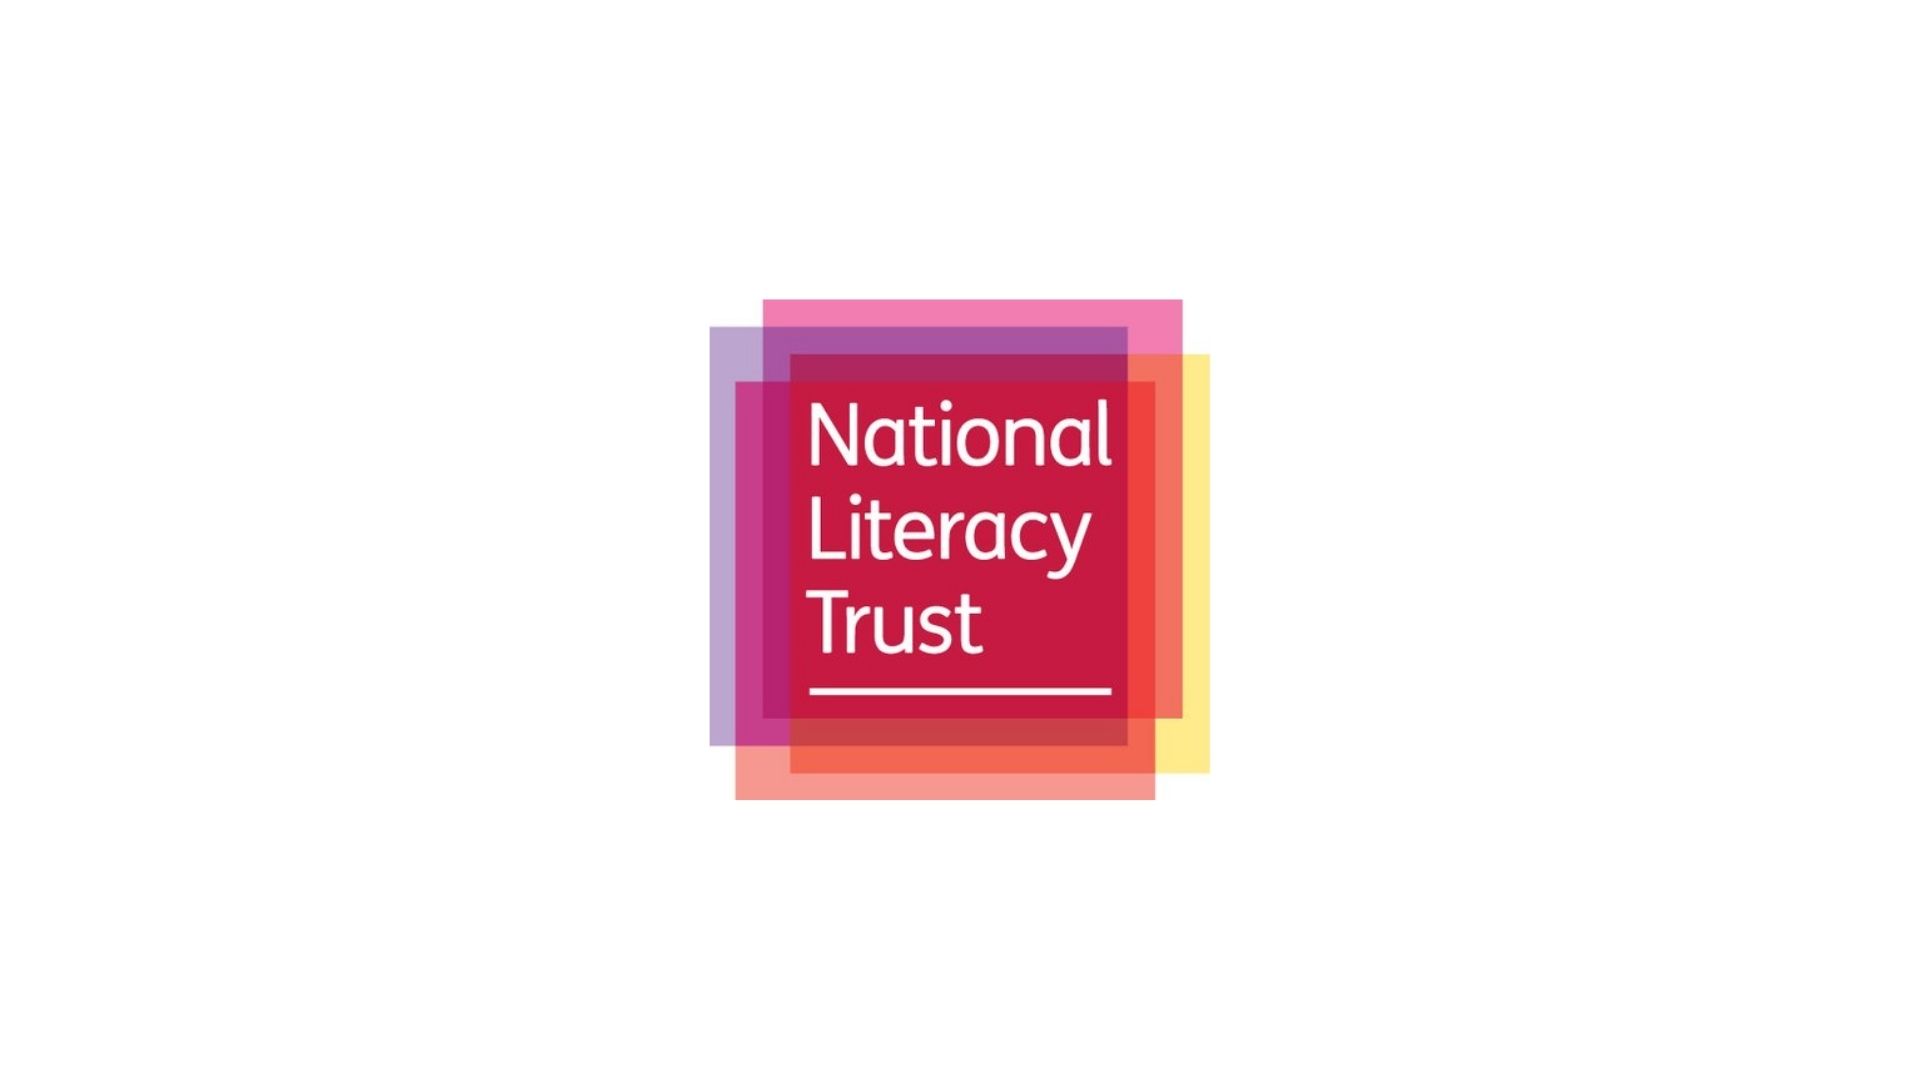 National Literacy Trust"